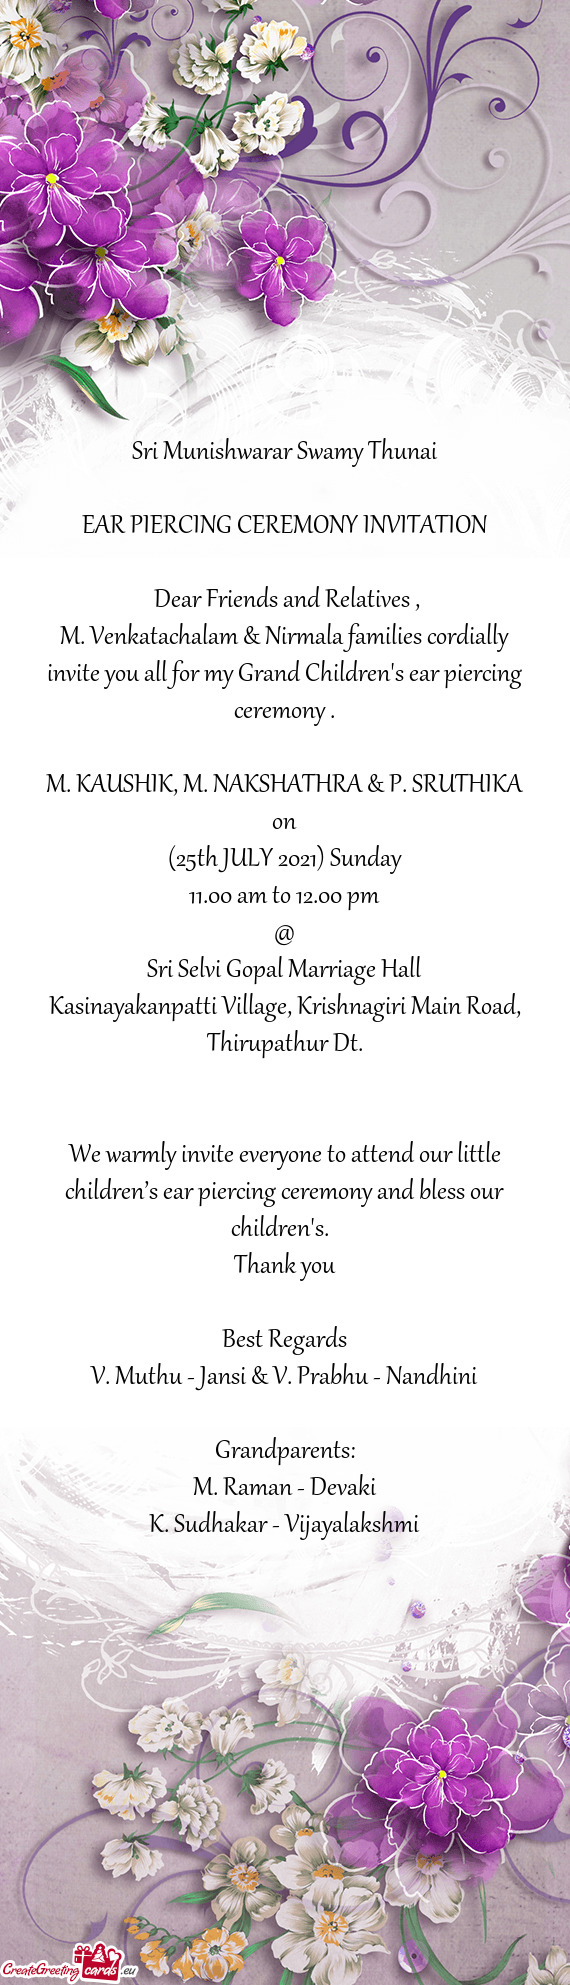 M. Venkatachalam & Nirmala families cordially invite you all for my Grand Children